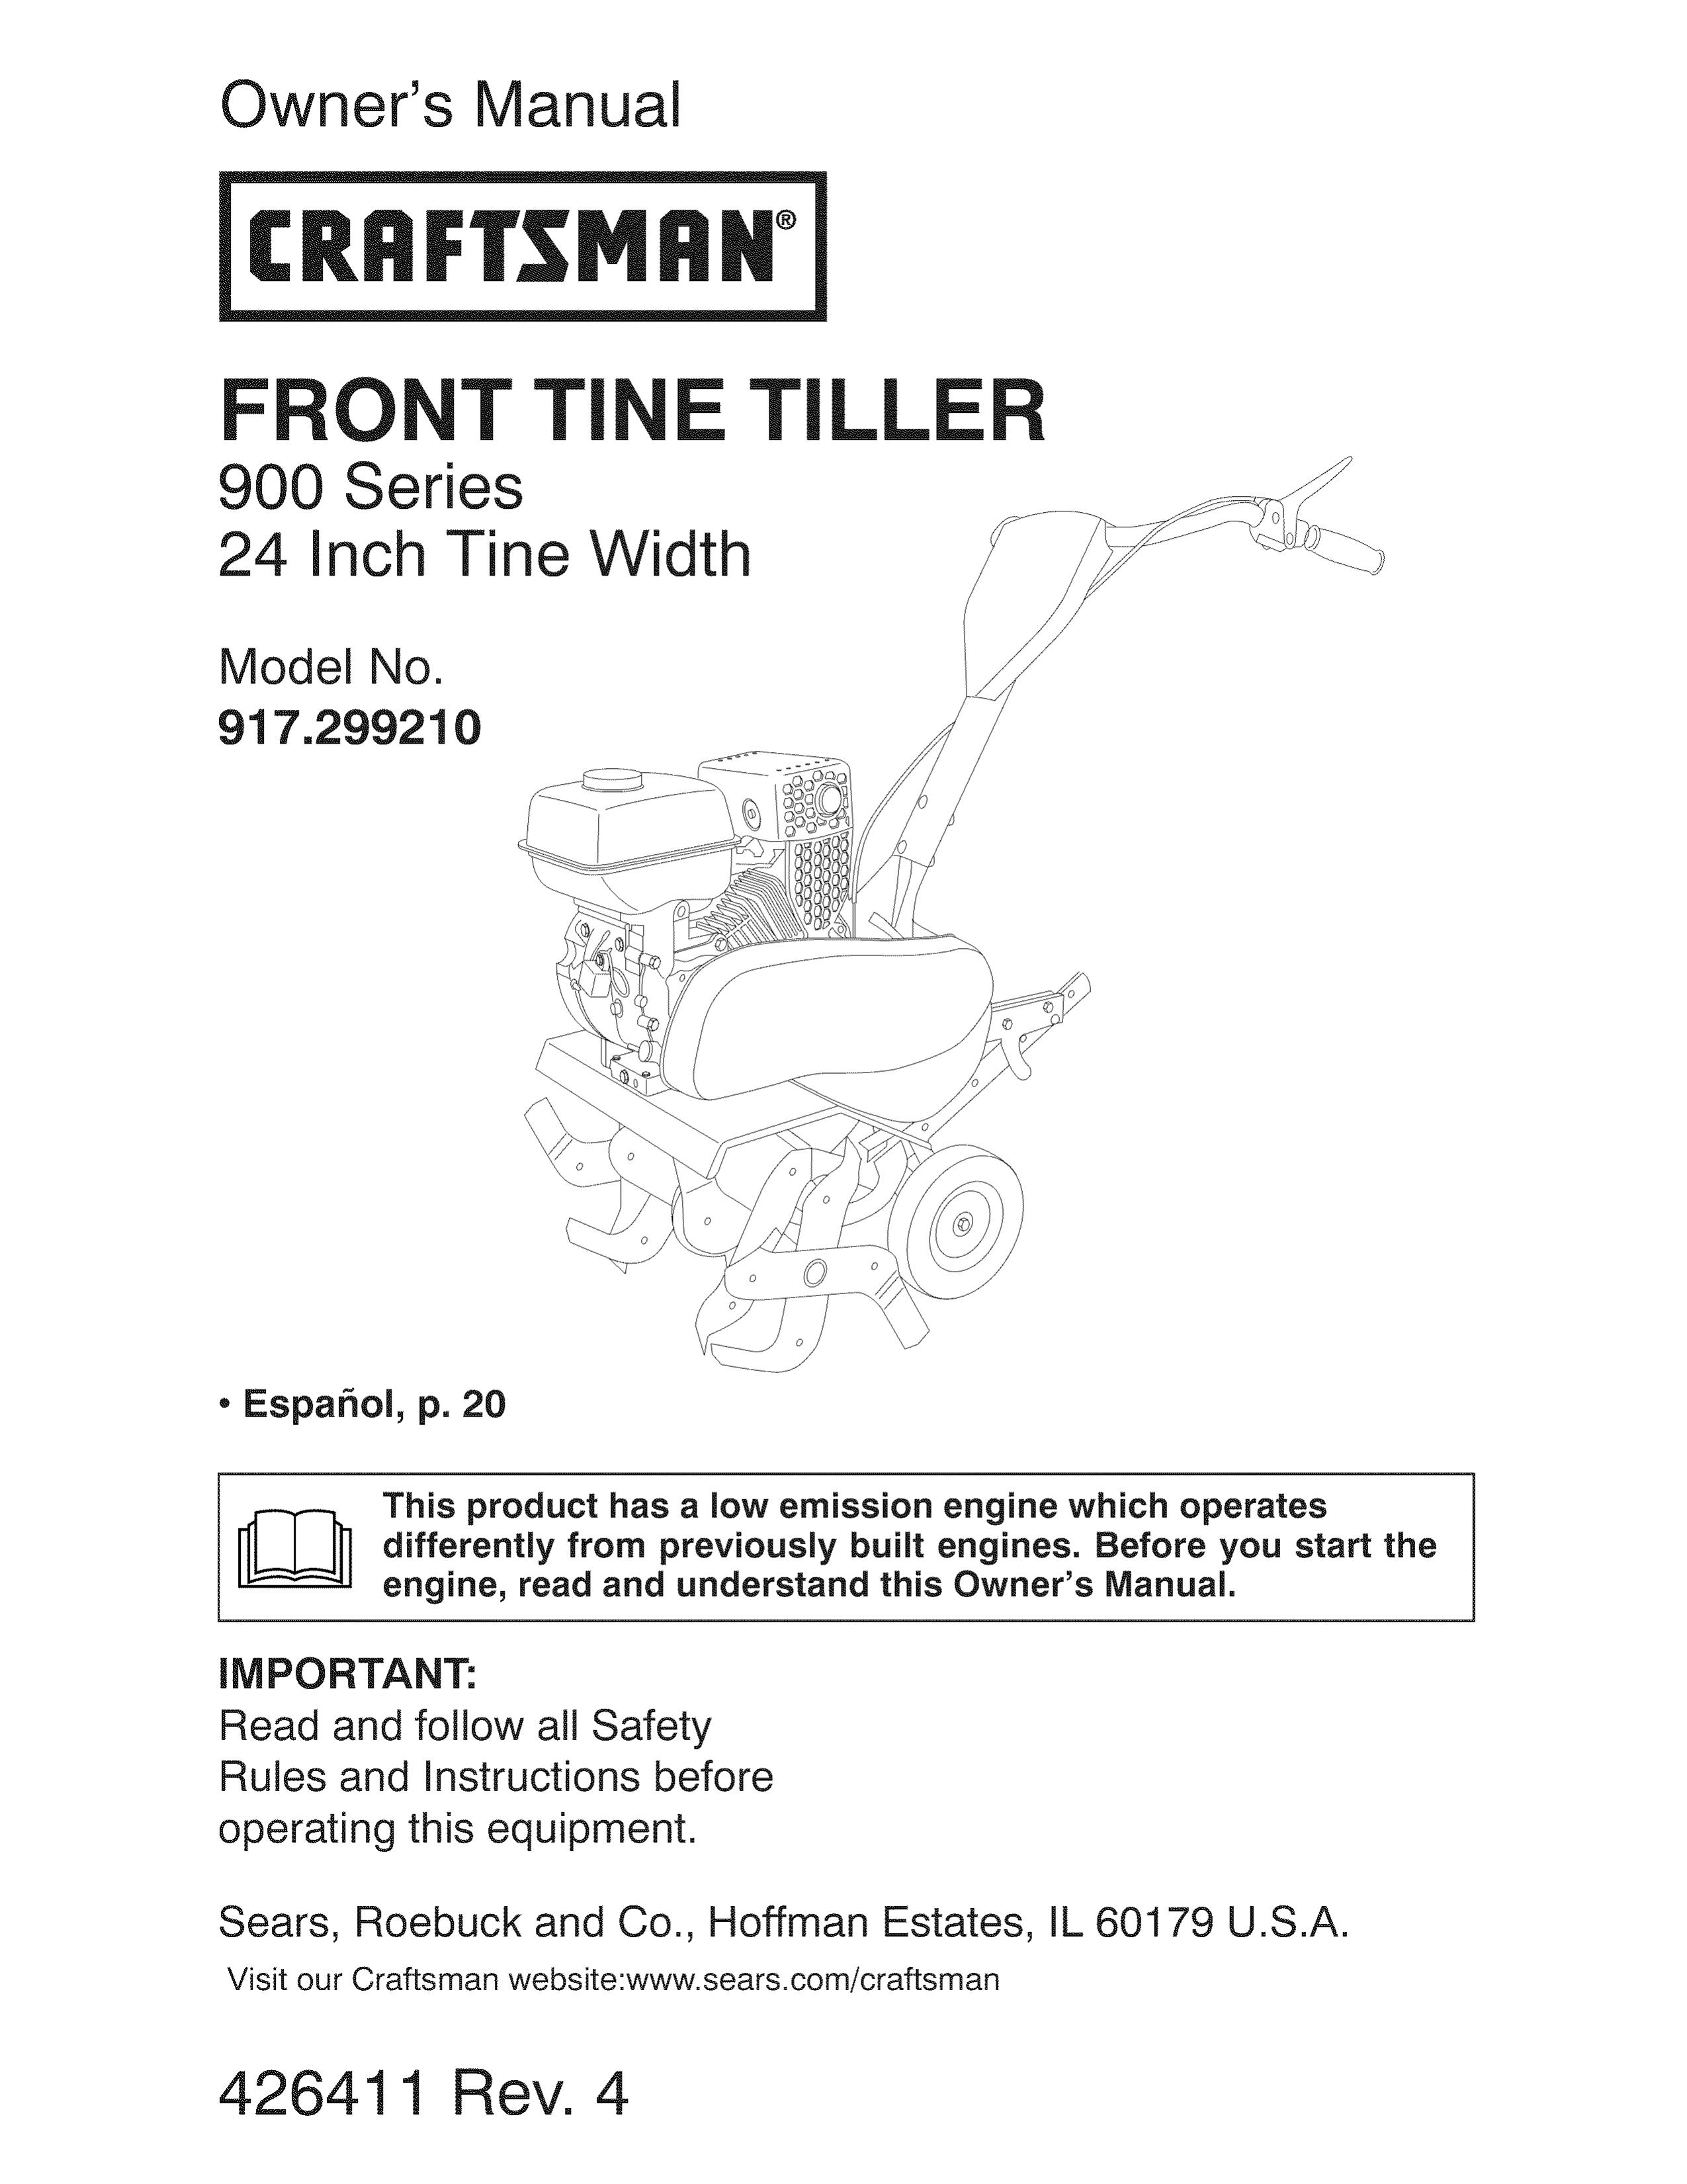 Craftsman 917.29921 Tiller User Manual